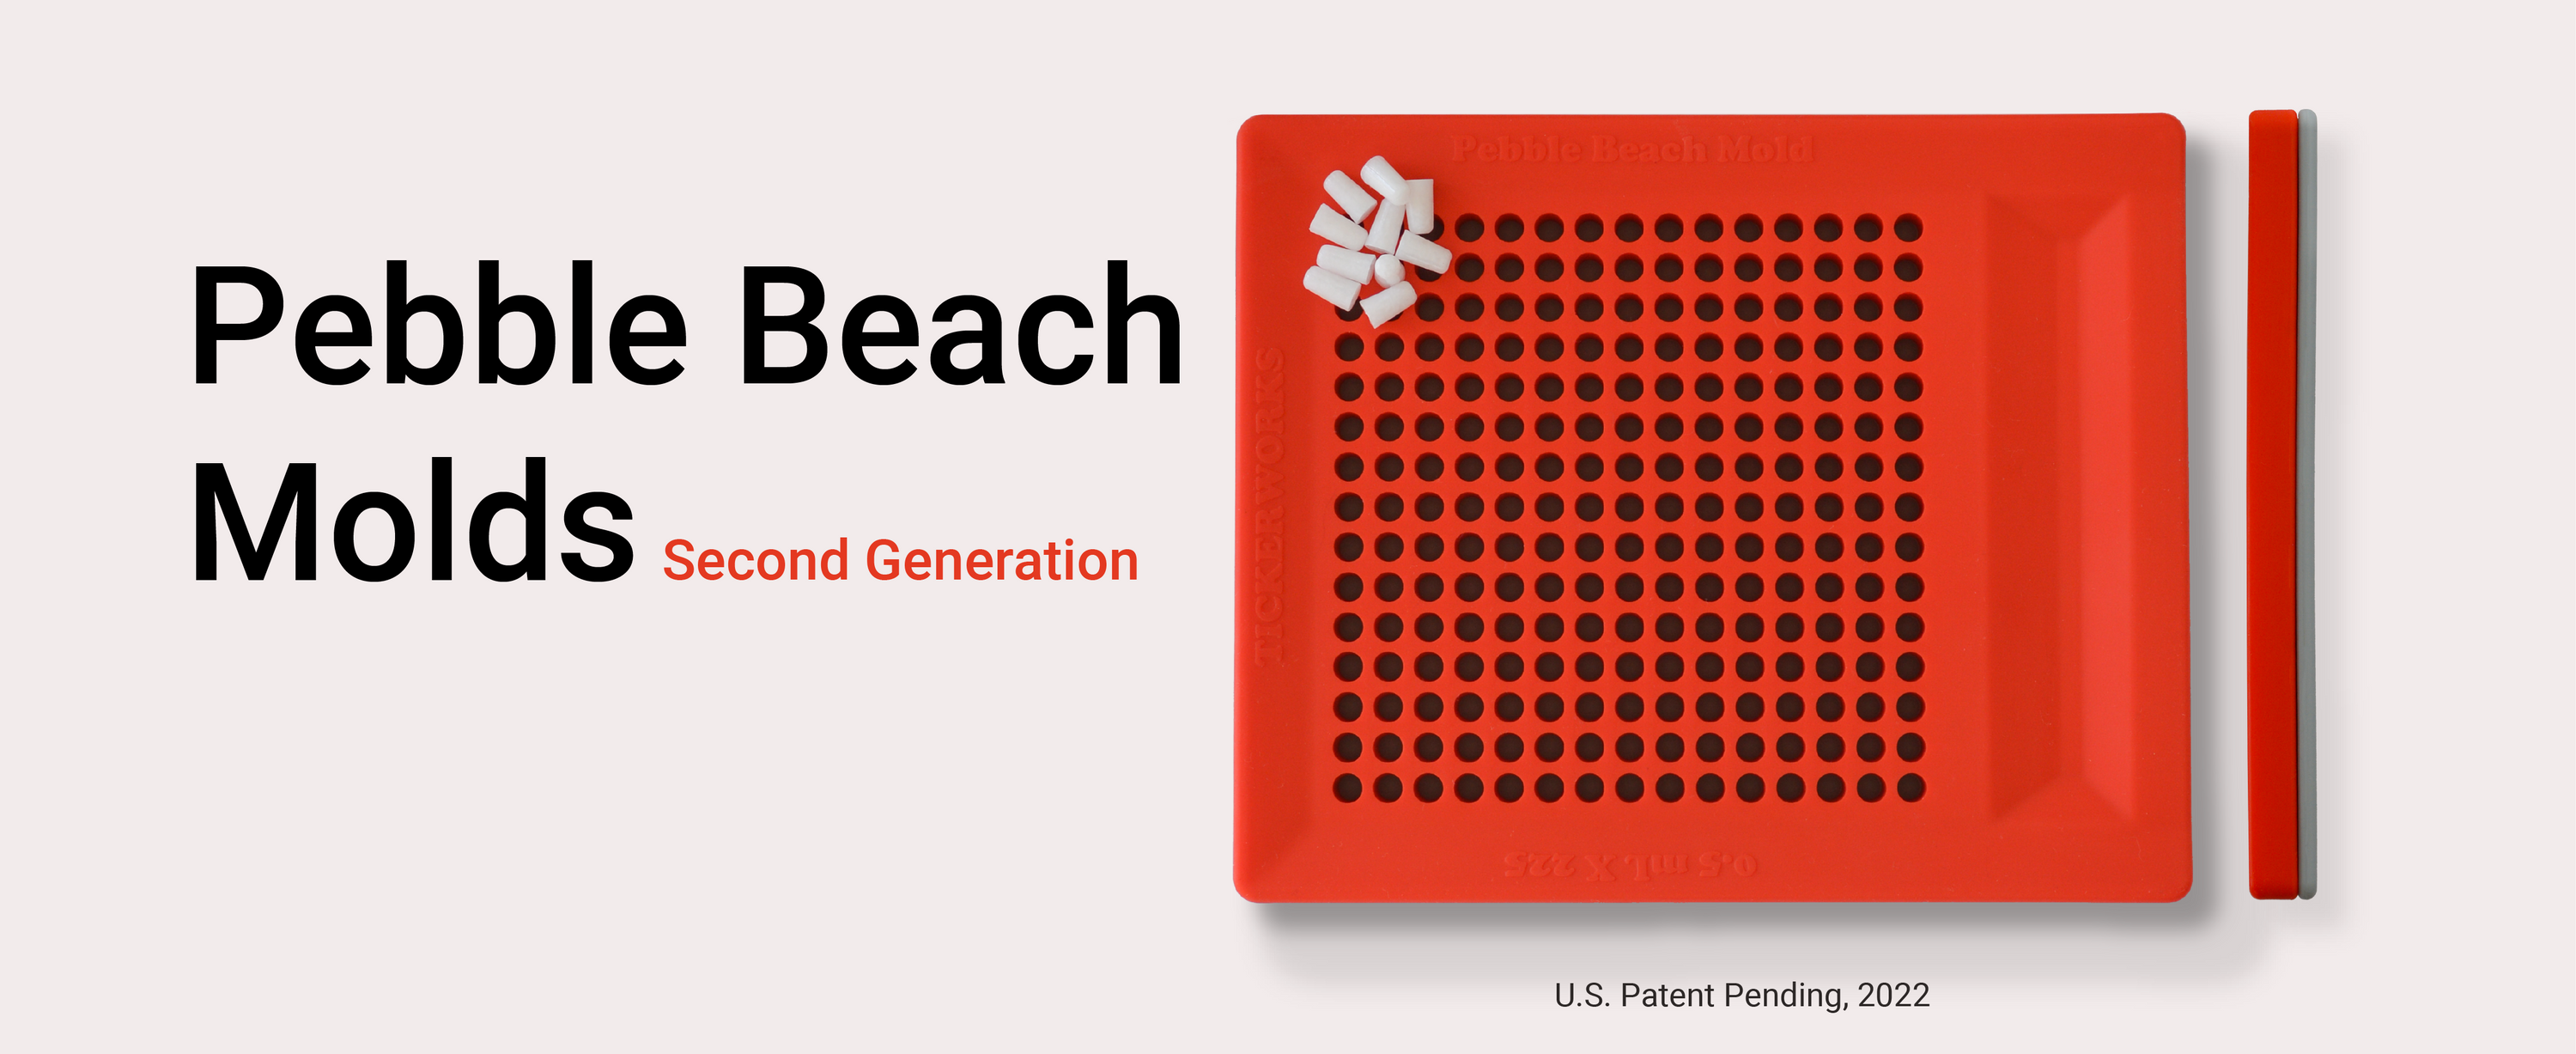 Pebble Beach 2nd Generation Mold